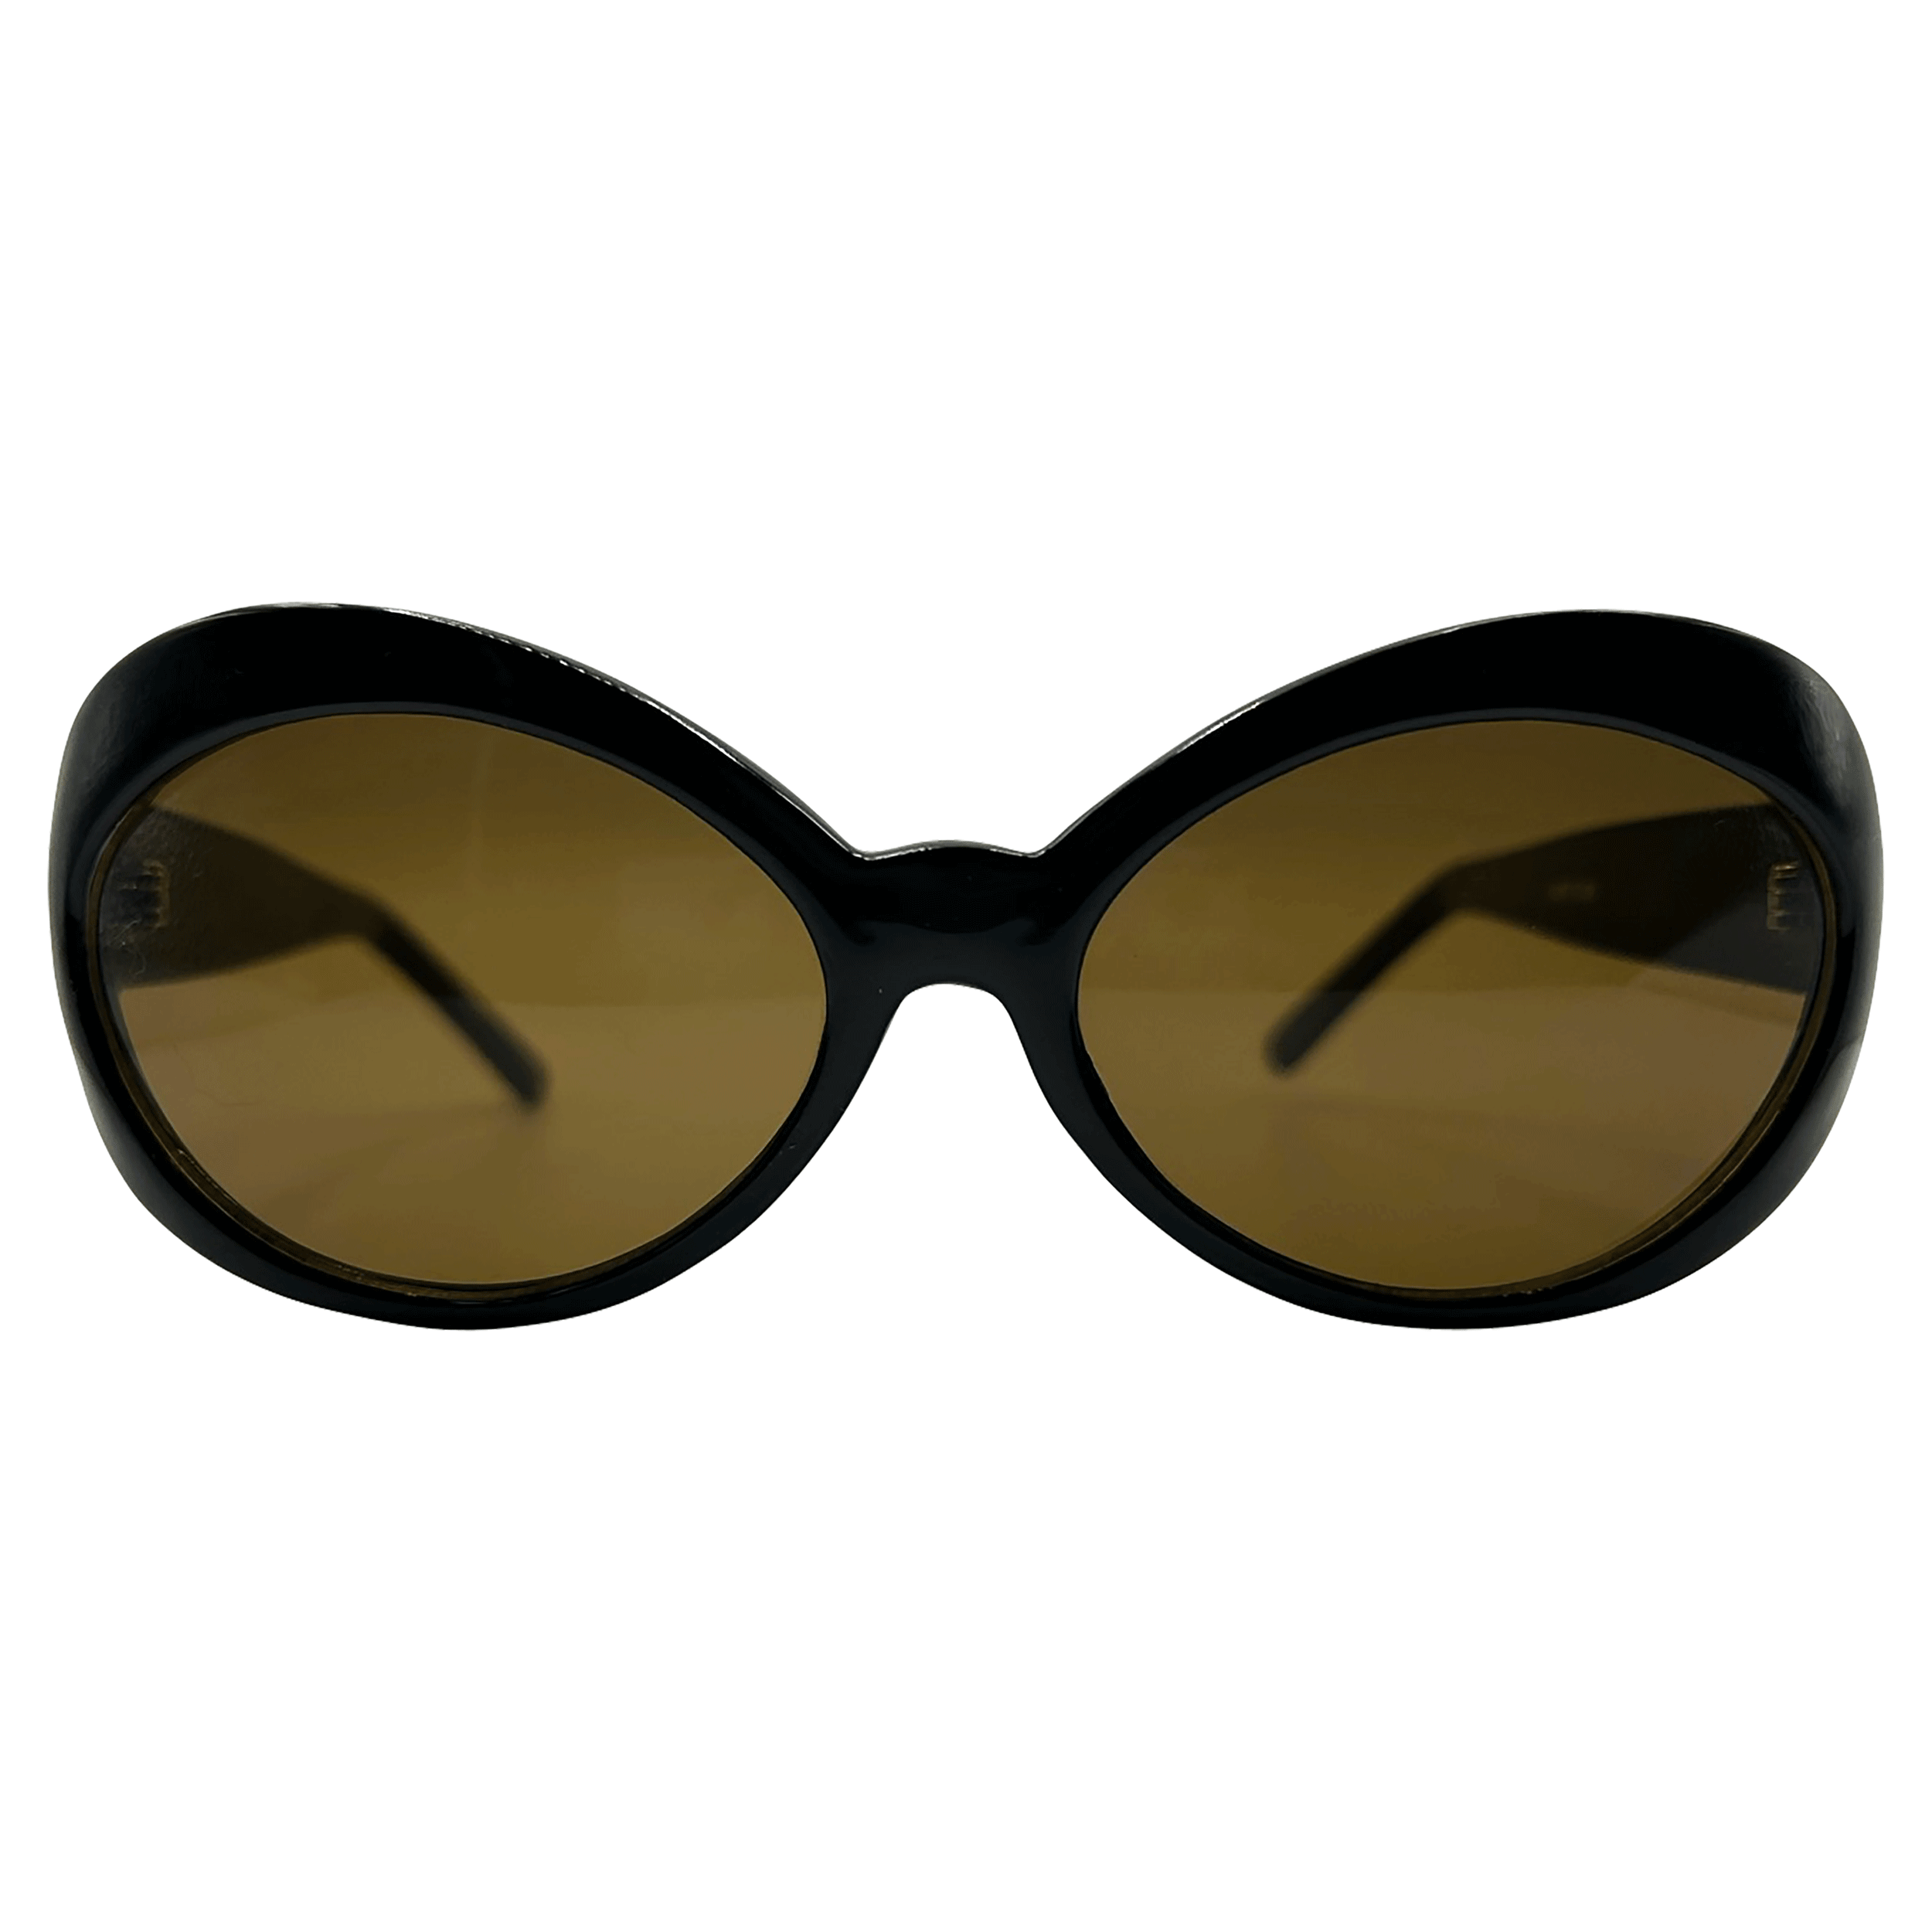 FUTUREFOX Black/Brown Bug-Eye Sunglasses